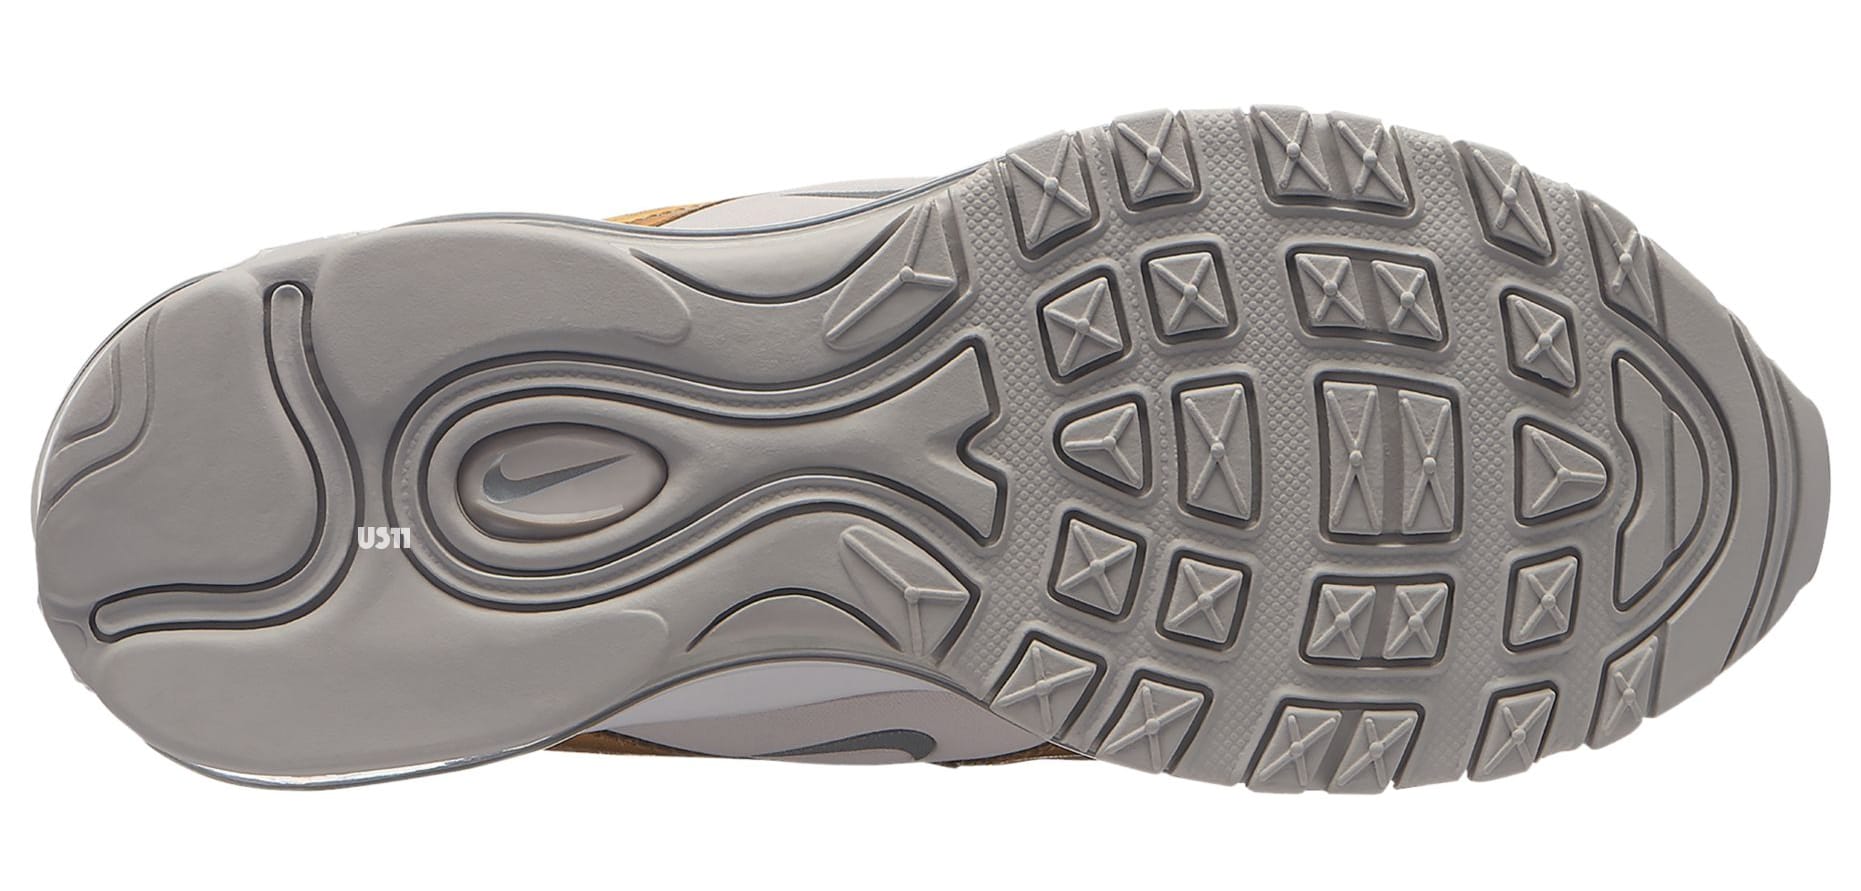 Nike Air Max 97 SE &#x27;Vast Grey/Metallic Silver/Metallic Gold&#x27; (Sole)